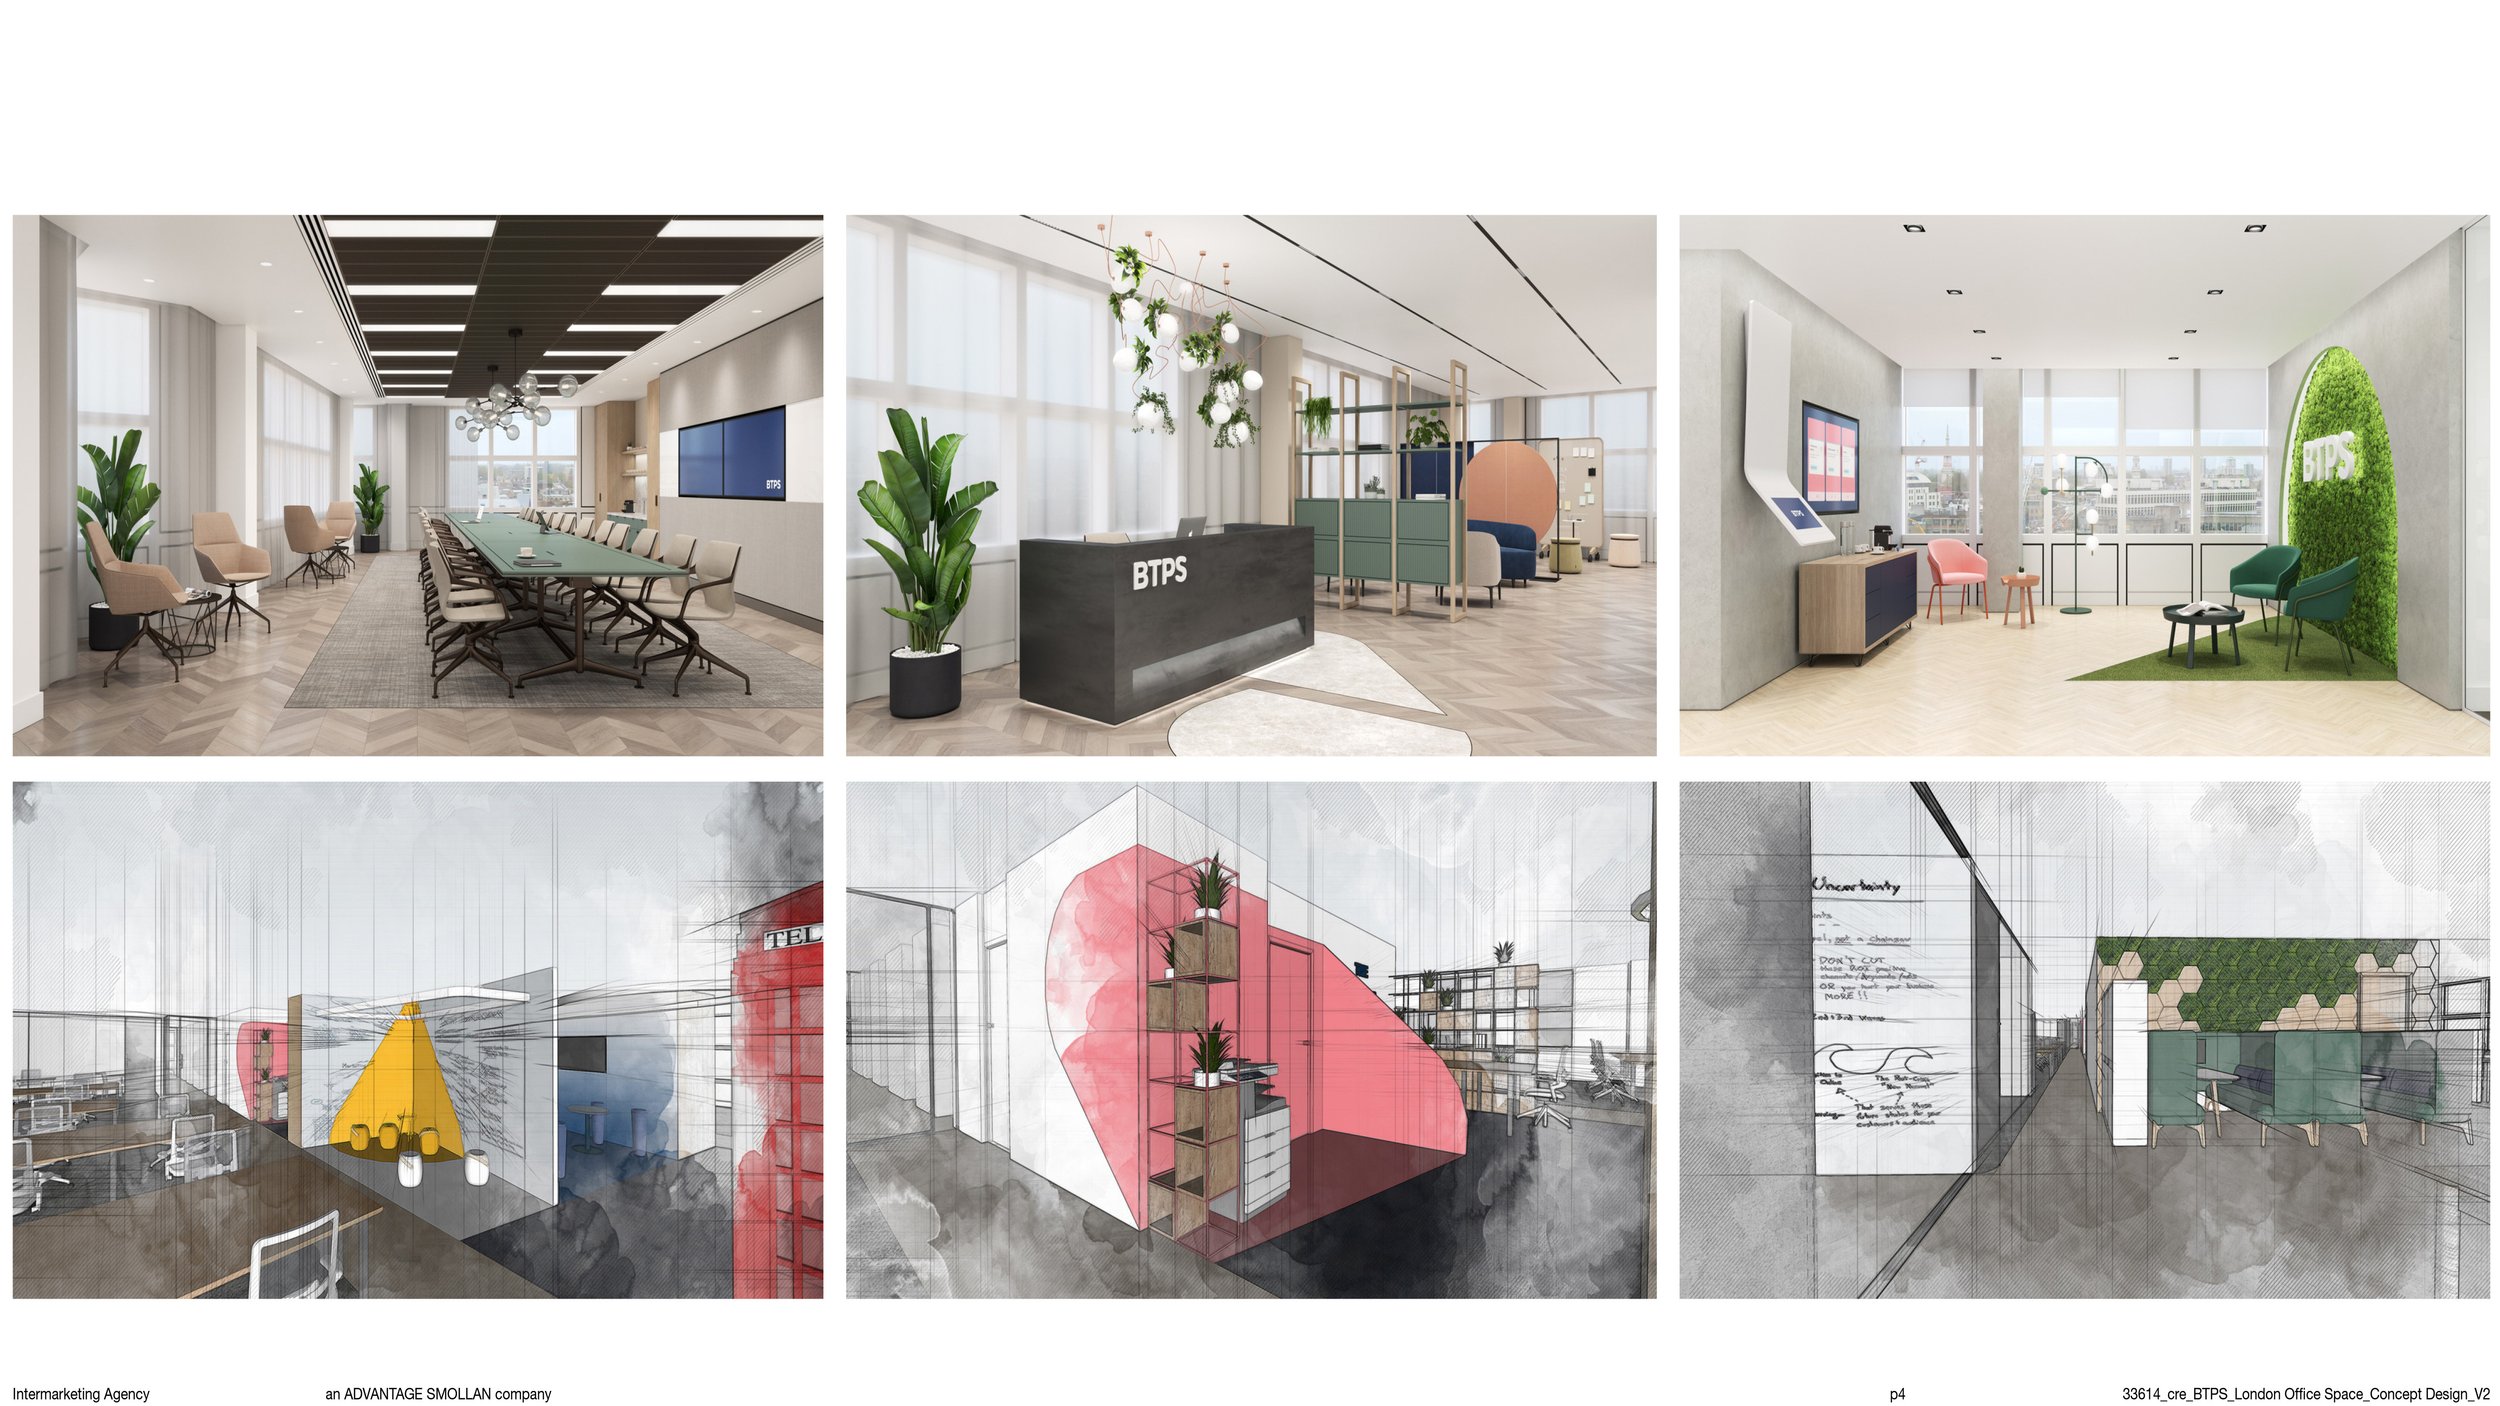 33614_cre_BTPS_London Office Space_Concept Design_V2-4.jpg